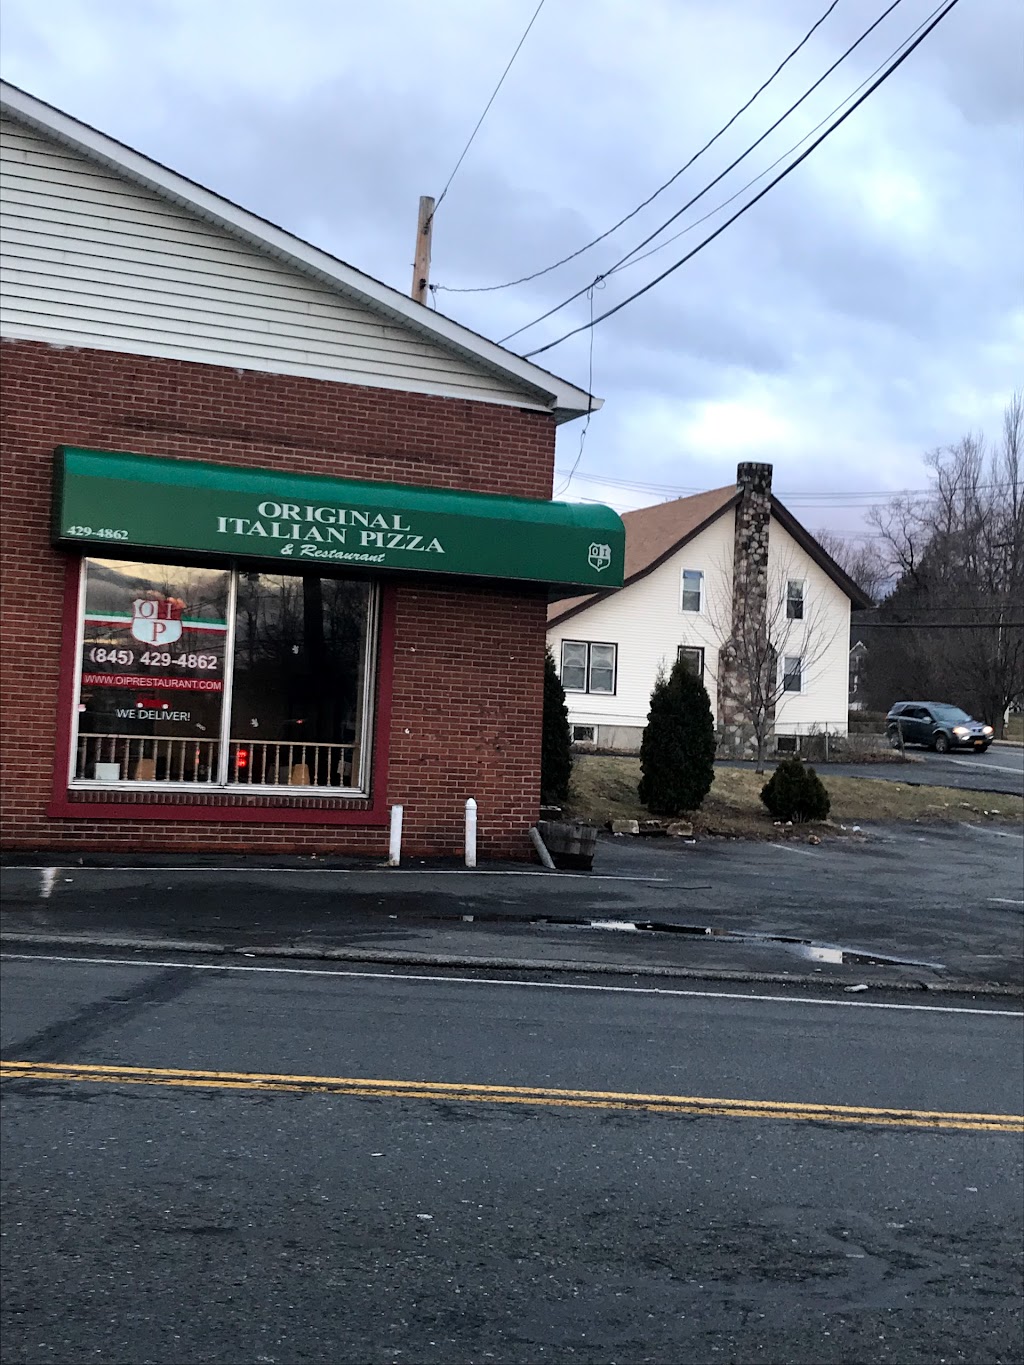 Original Italian Pizza & Restaurant | 1 Main St, Garnerville, NY 10923 | Phone: (845) 429-4862